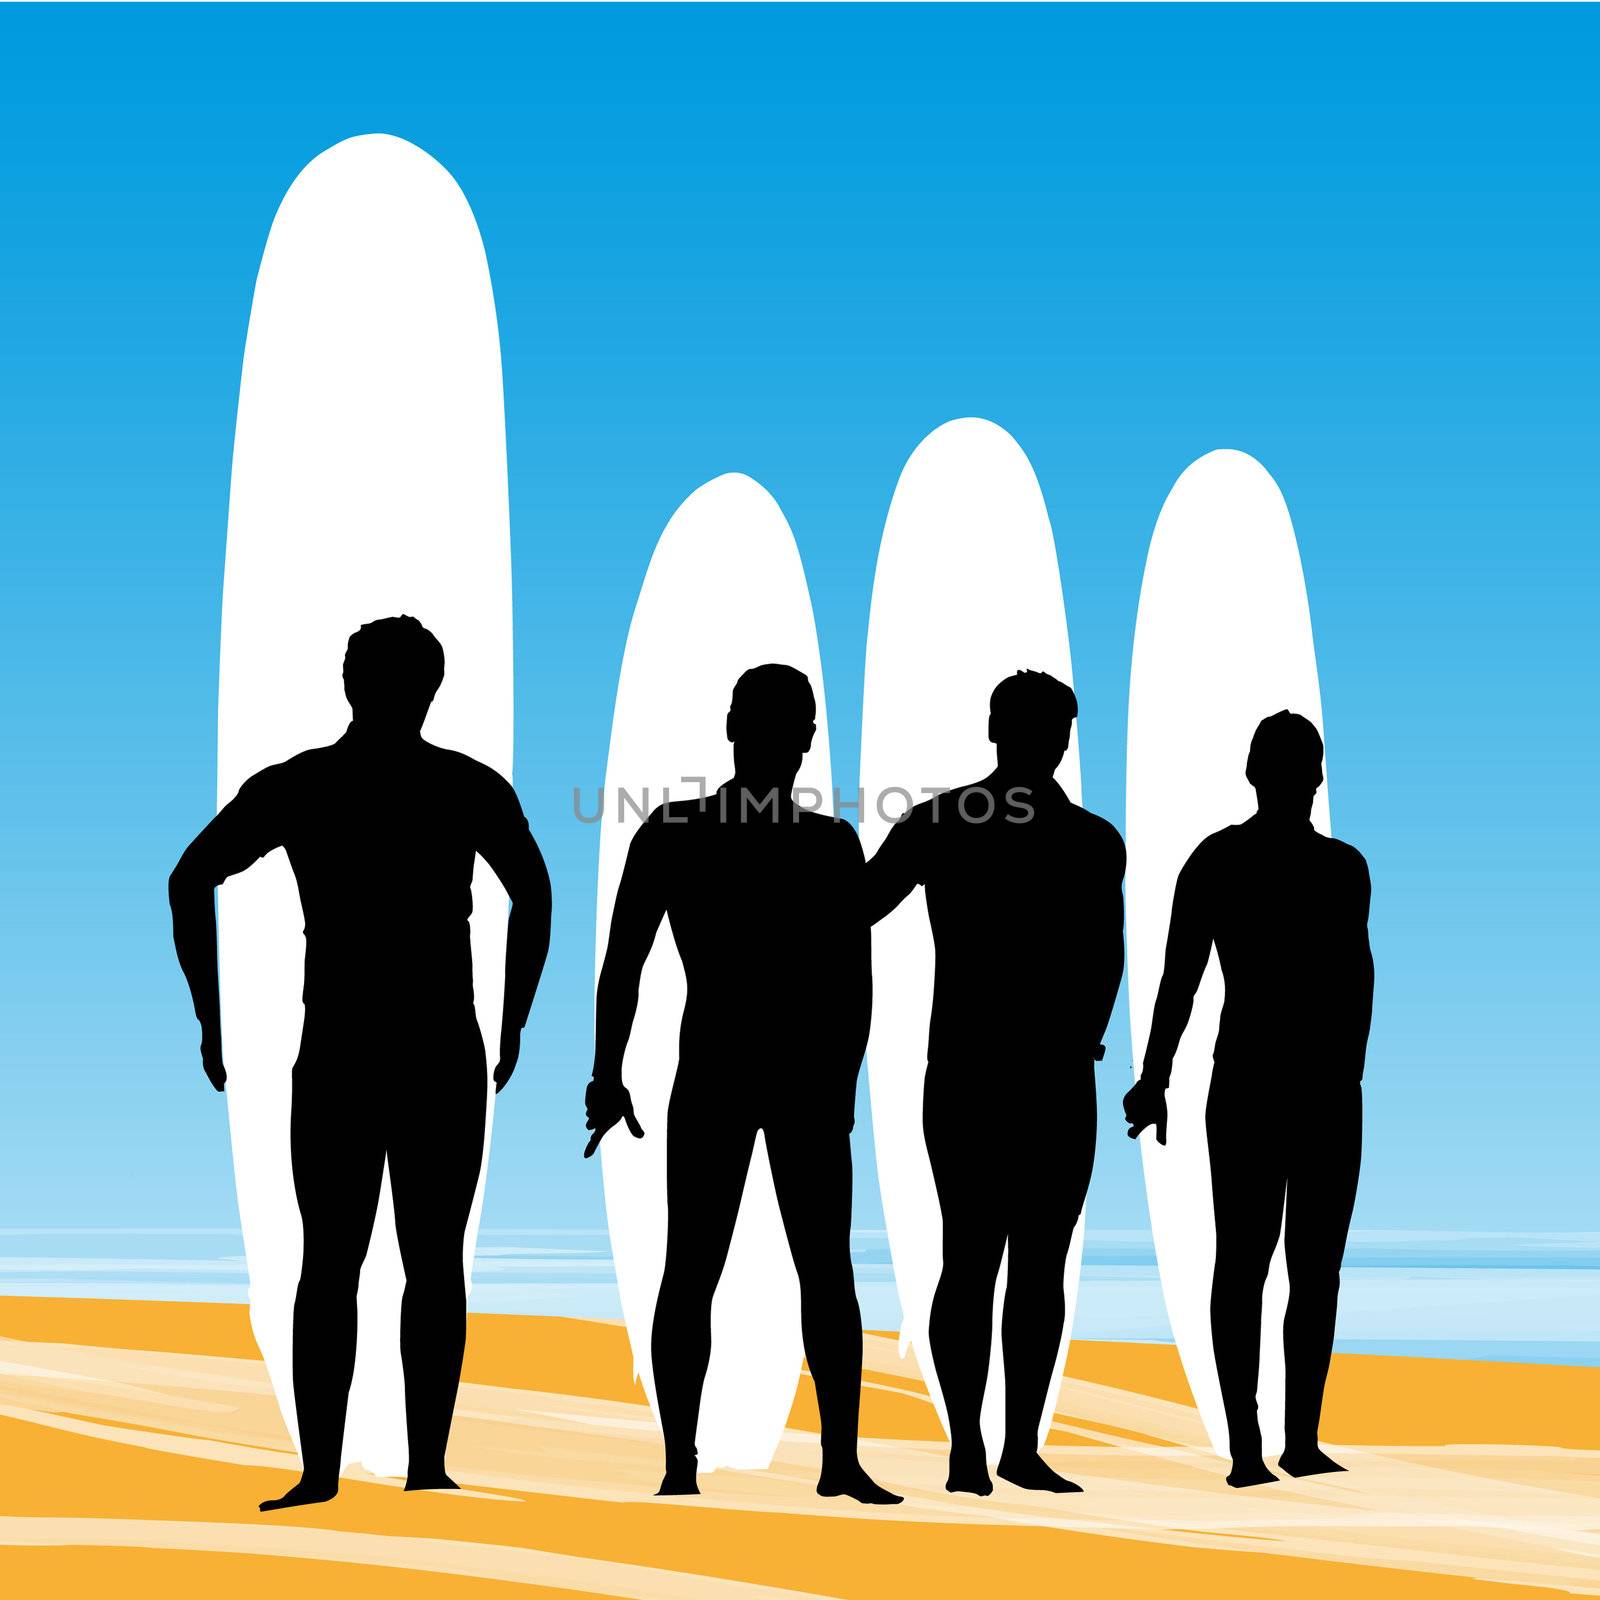 Surf pose by homydesign